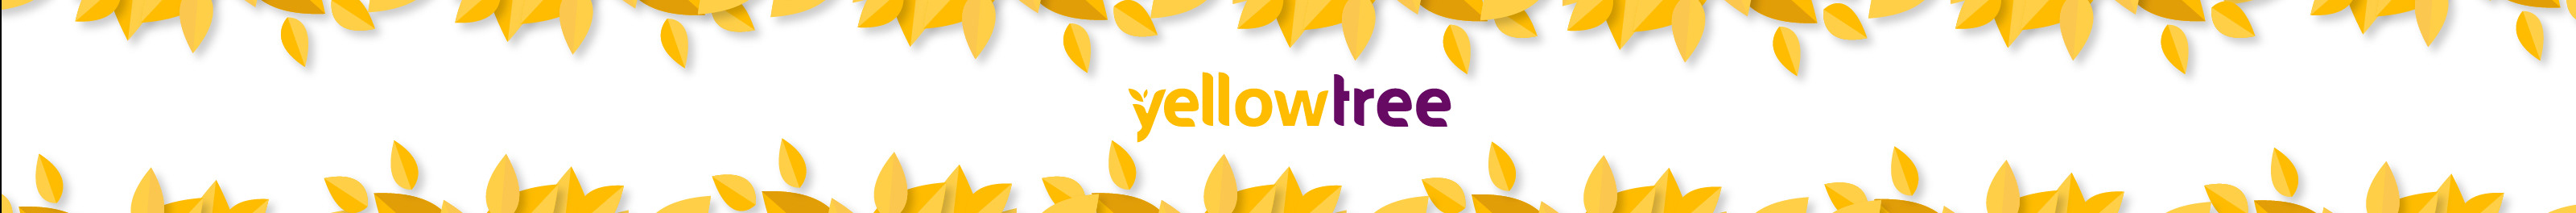 Yellow Tree's profile banner